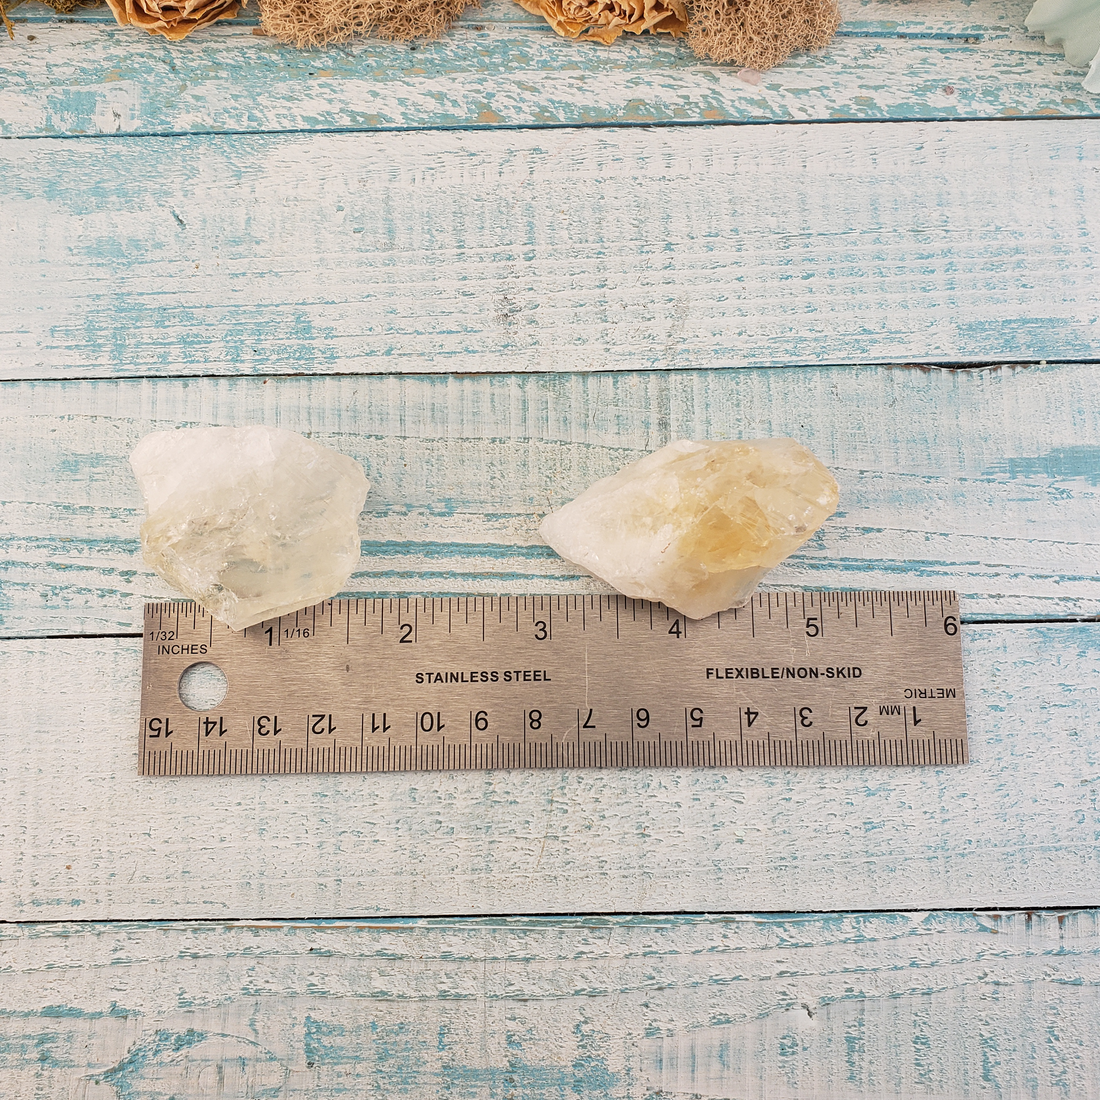 Raw Citrine Crystal | Natural Citrine Gemstone | Rough Gemstone Raw Crystal - Measurements